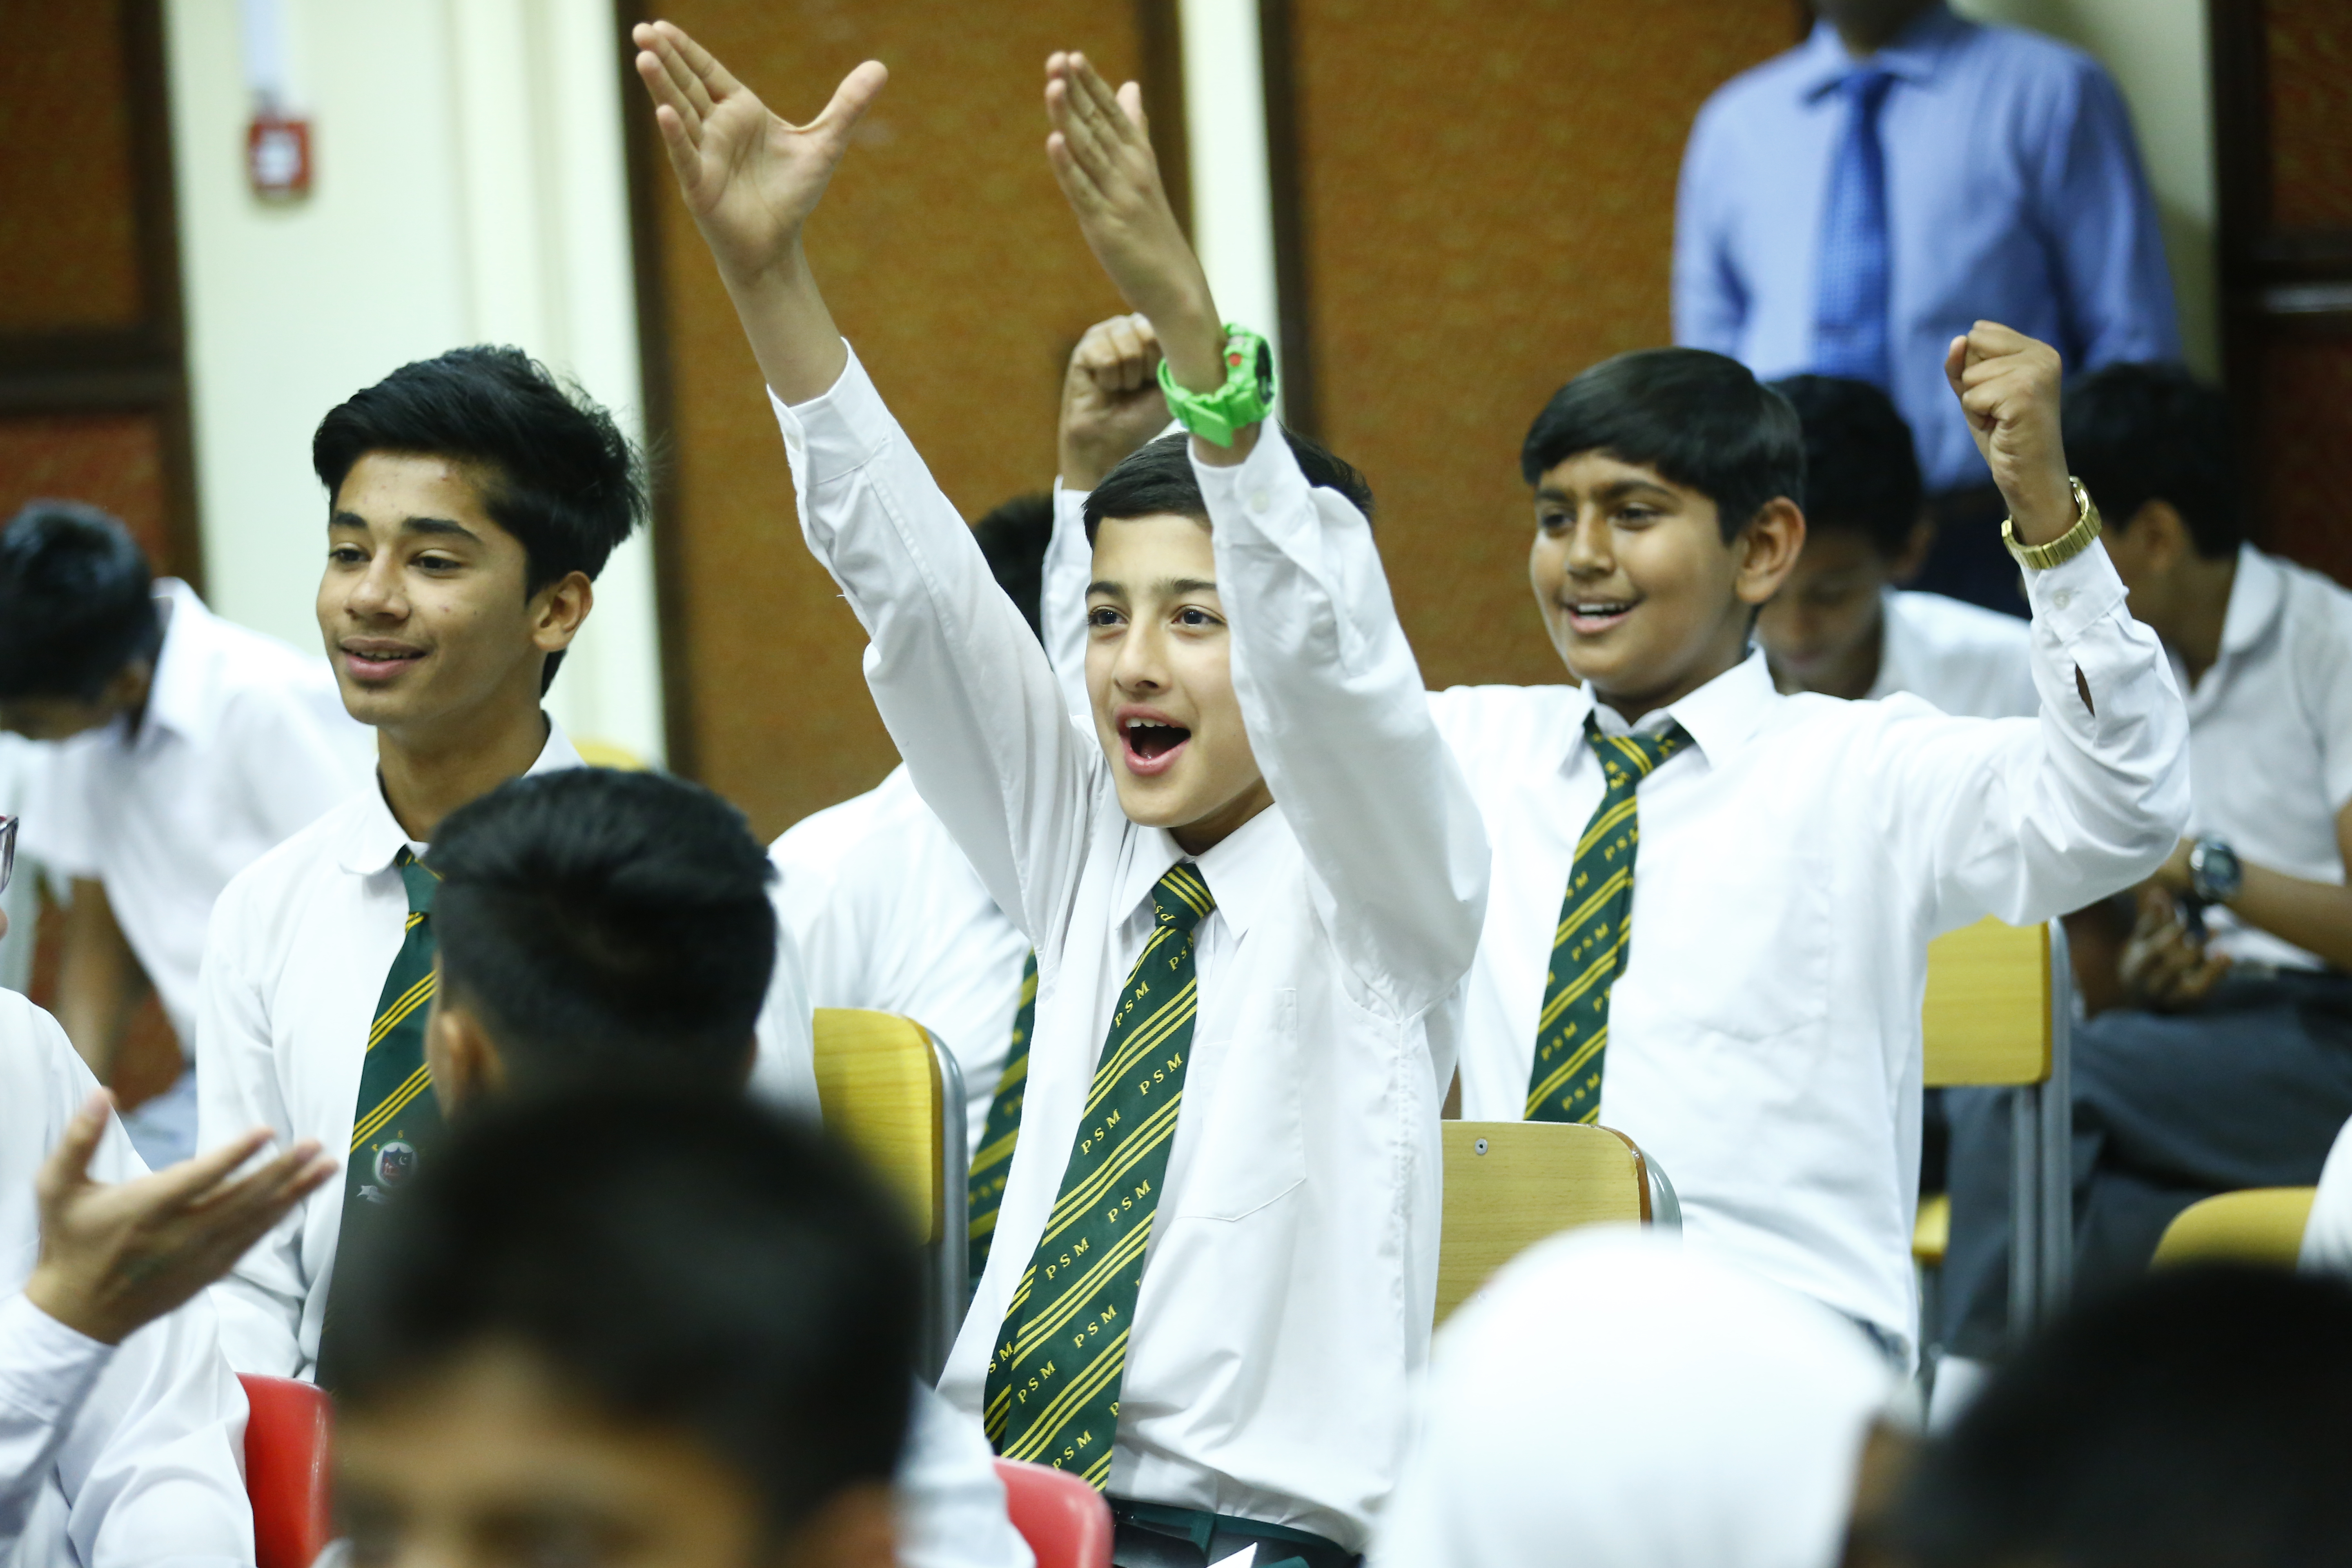 Times of Oman Inter School Quiz Contest set for Thursday finals